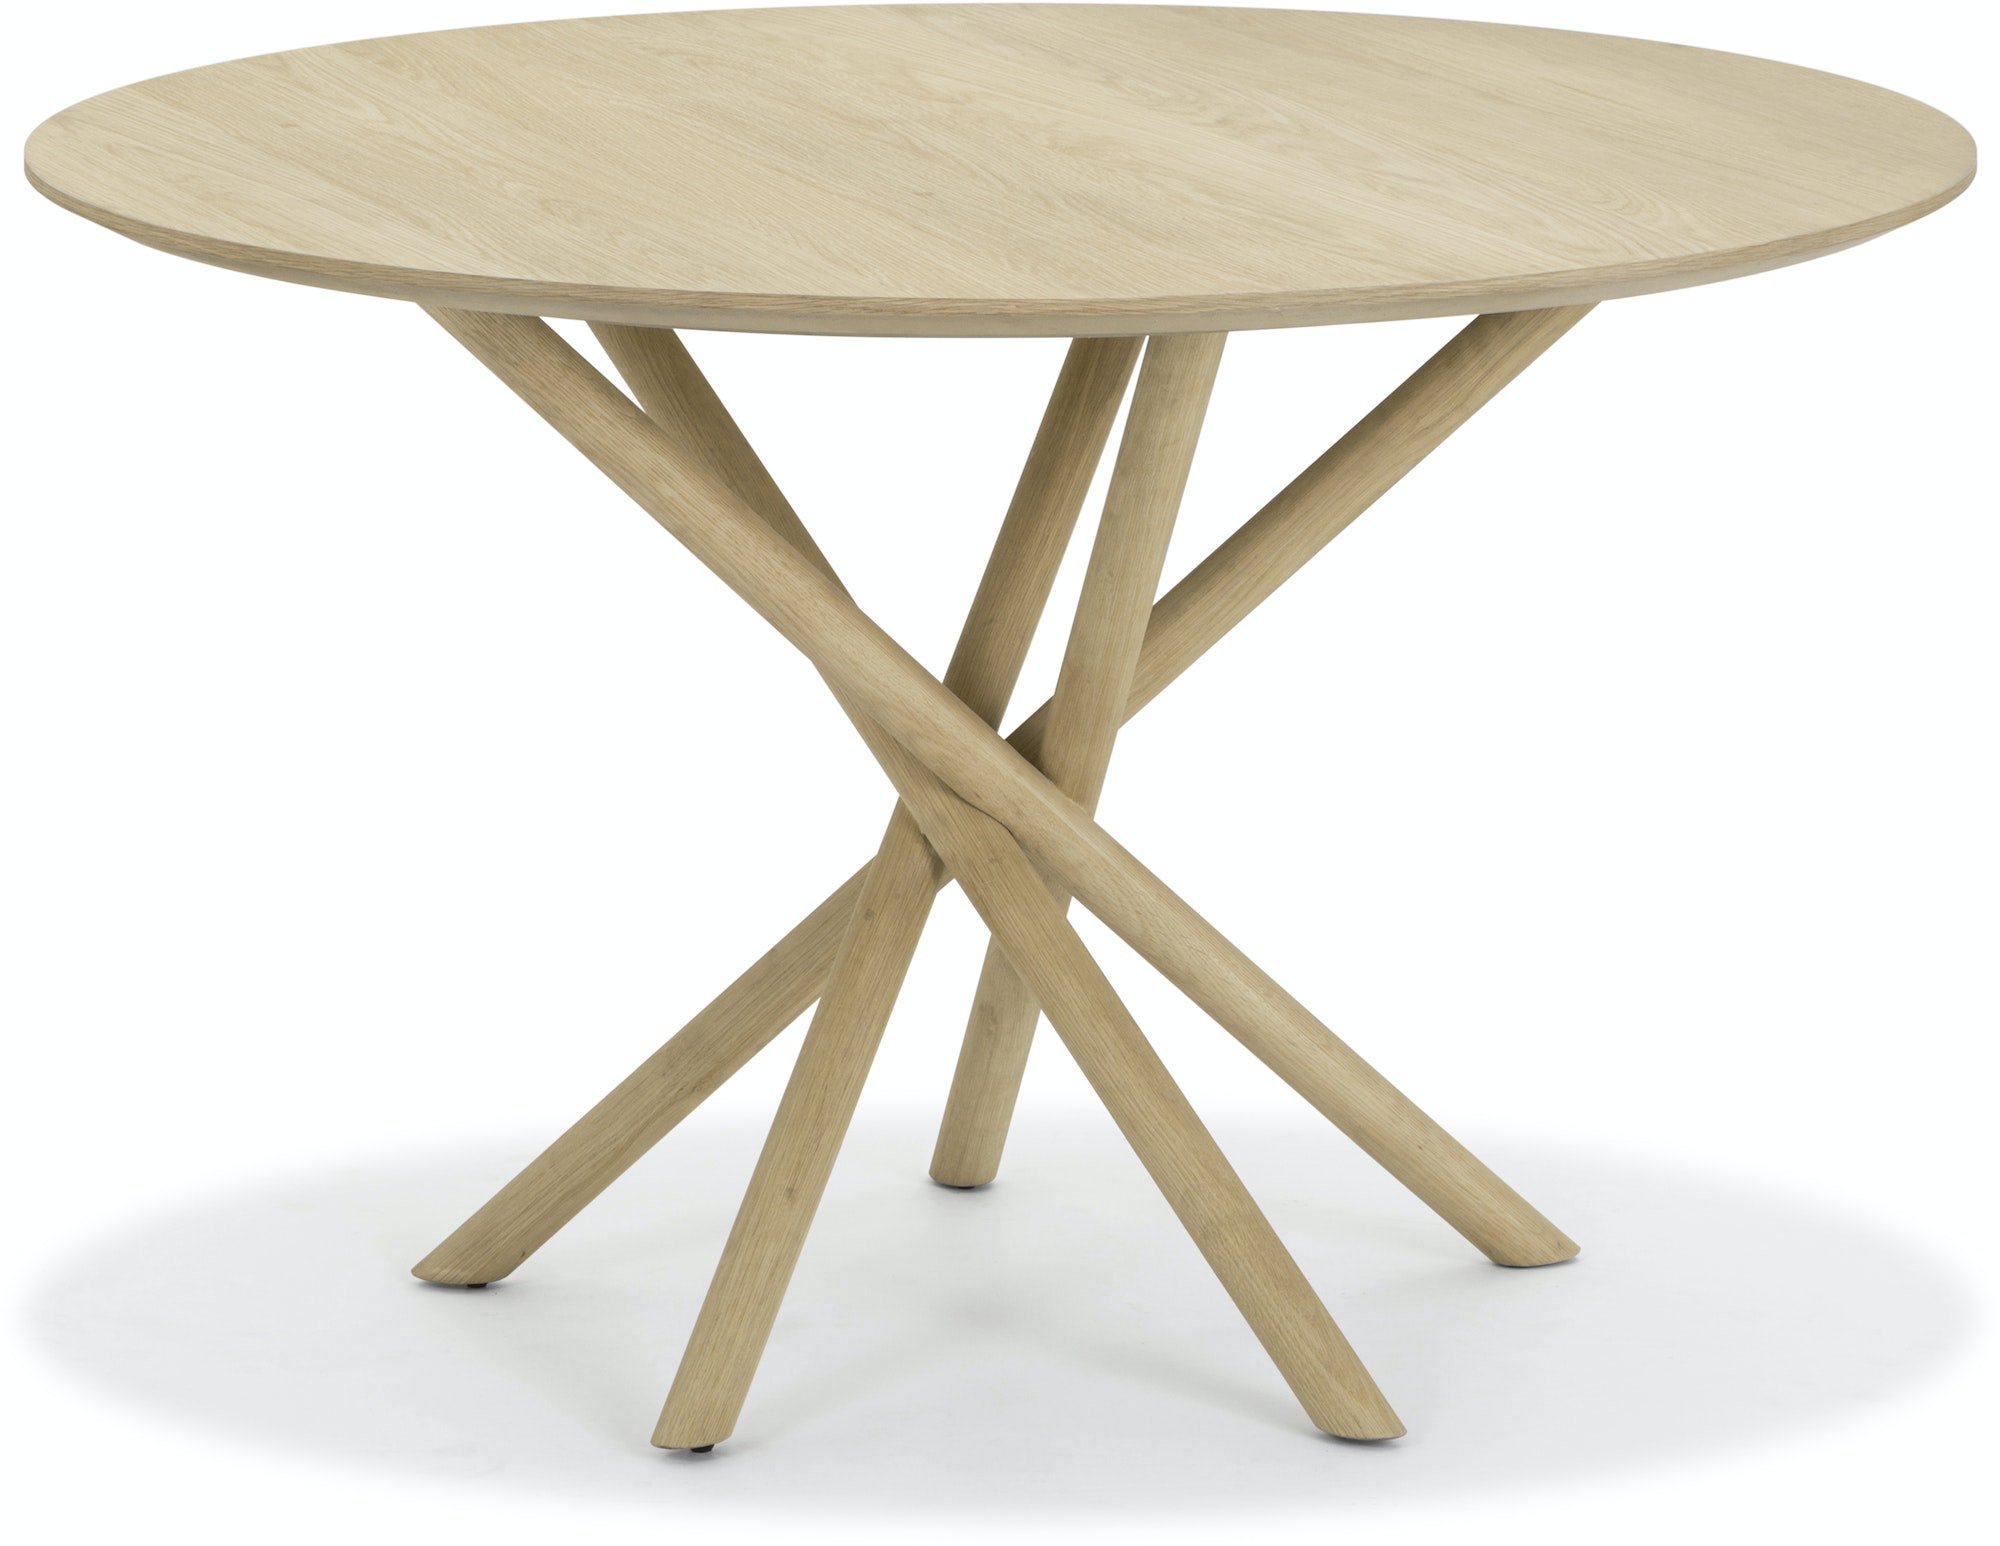 På billedet ser du Hasseris, Rundt spisebord, Krydsstel, Ø120 cm, eg natur fra brandet Nielsen Design i en størrelse D: 120 cm. x H: 76 cm. x B: 120 cm. x L: 120 cm. i farven Eg natur